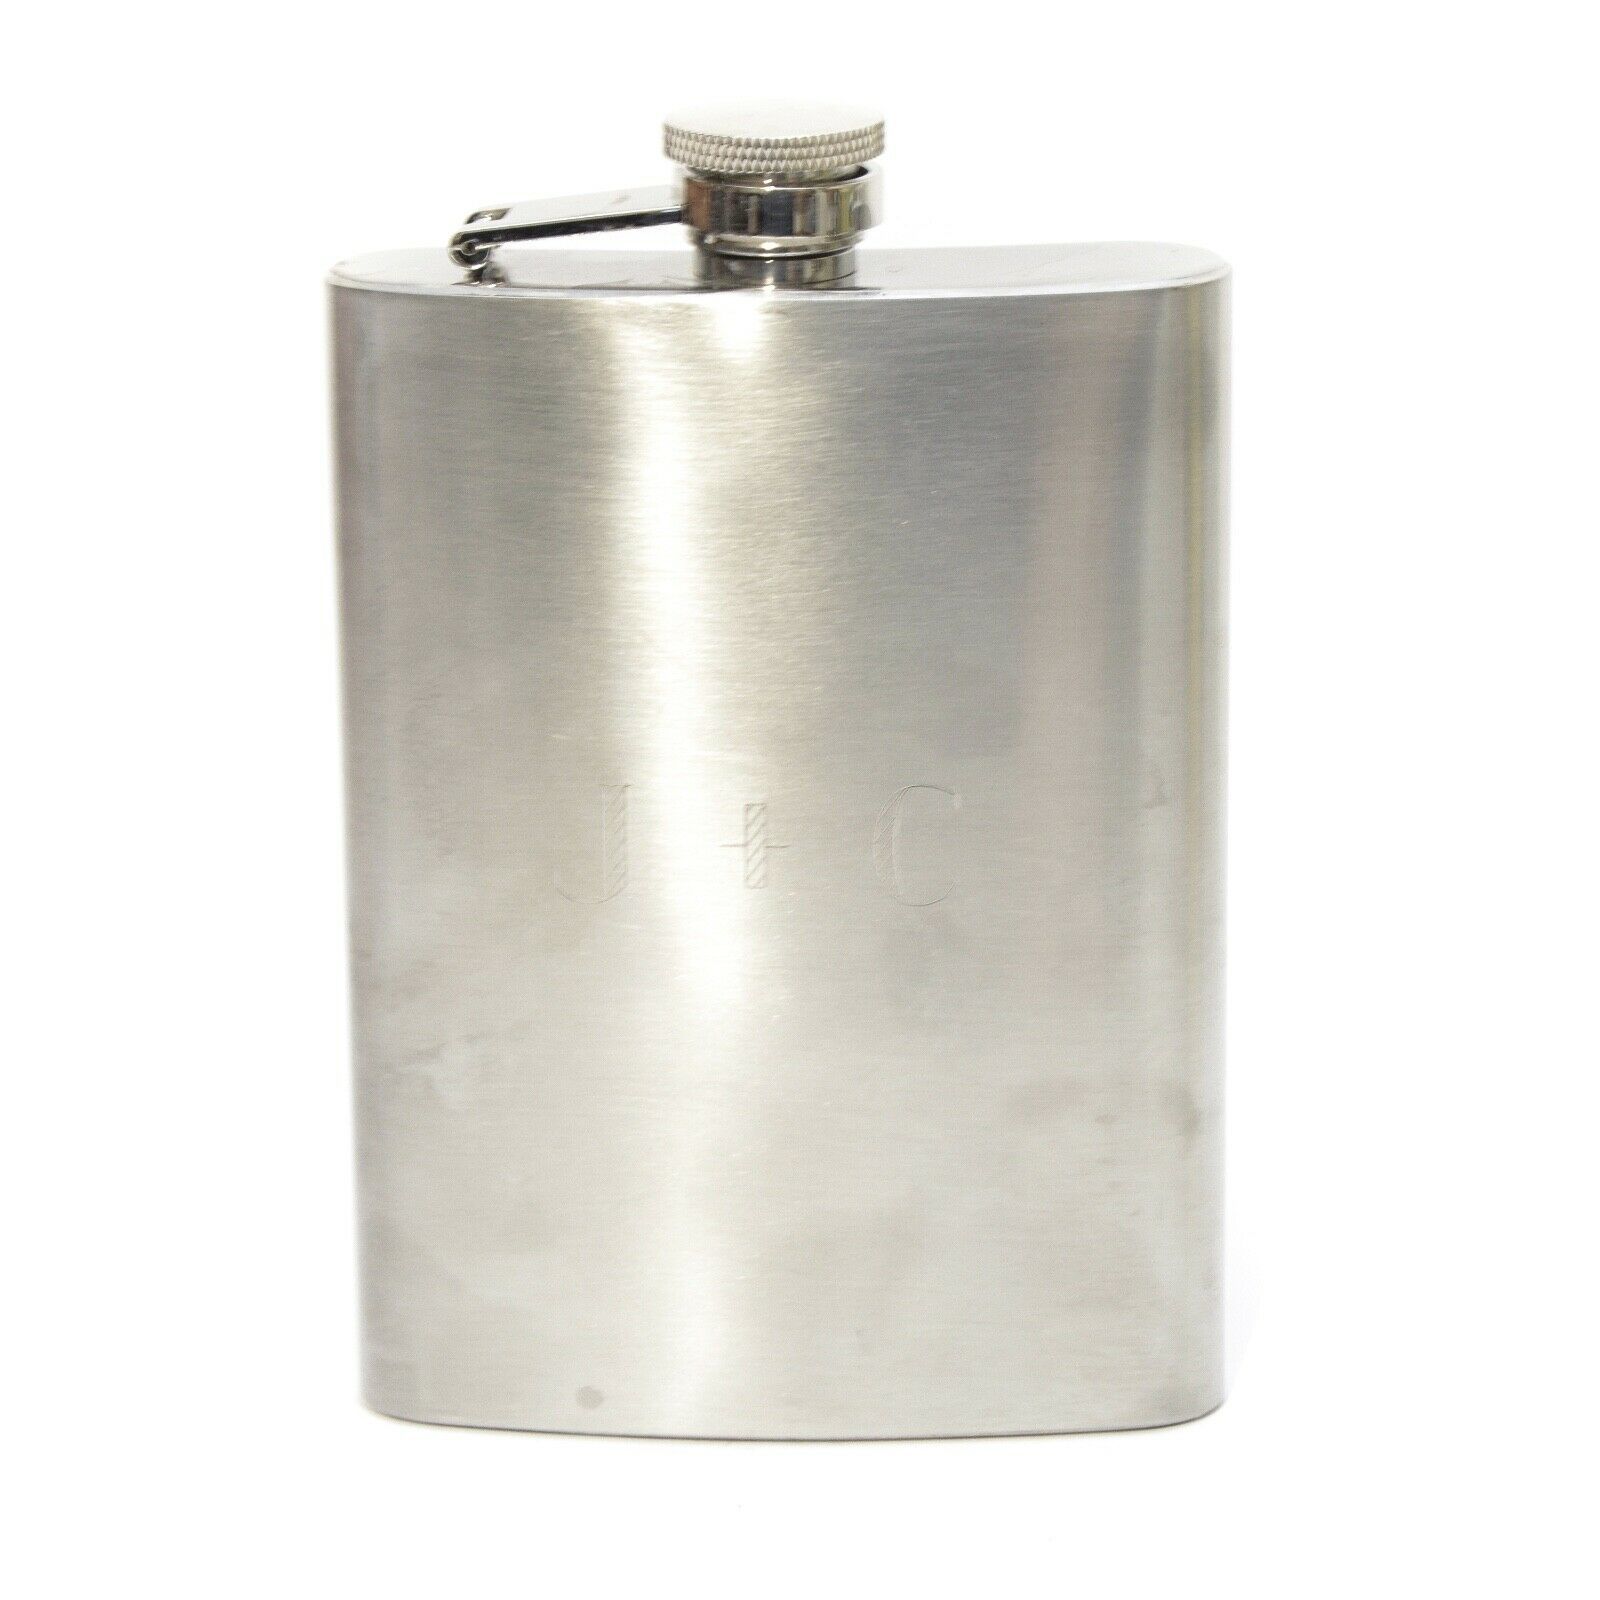 Stainless Steel Pocket Hip Flask Flask 9 oz. - $6.90